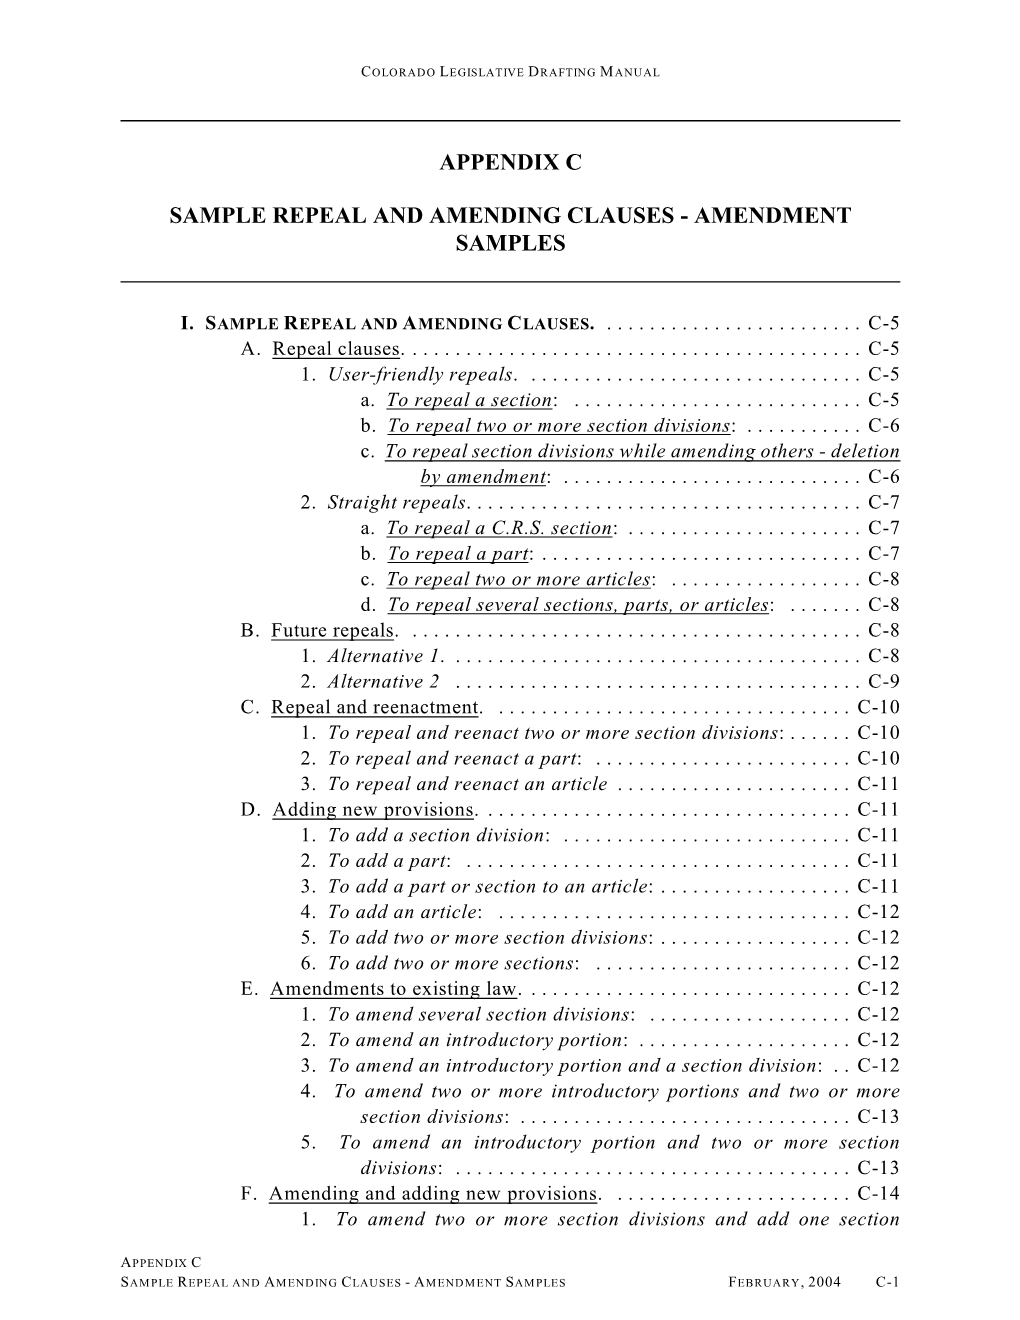 Appendix C Sample Repeal and Amending Clauses - Amendment Samples February, 2004 C-1 Colorado Legislative Drafting Manual